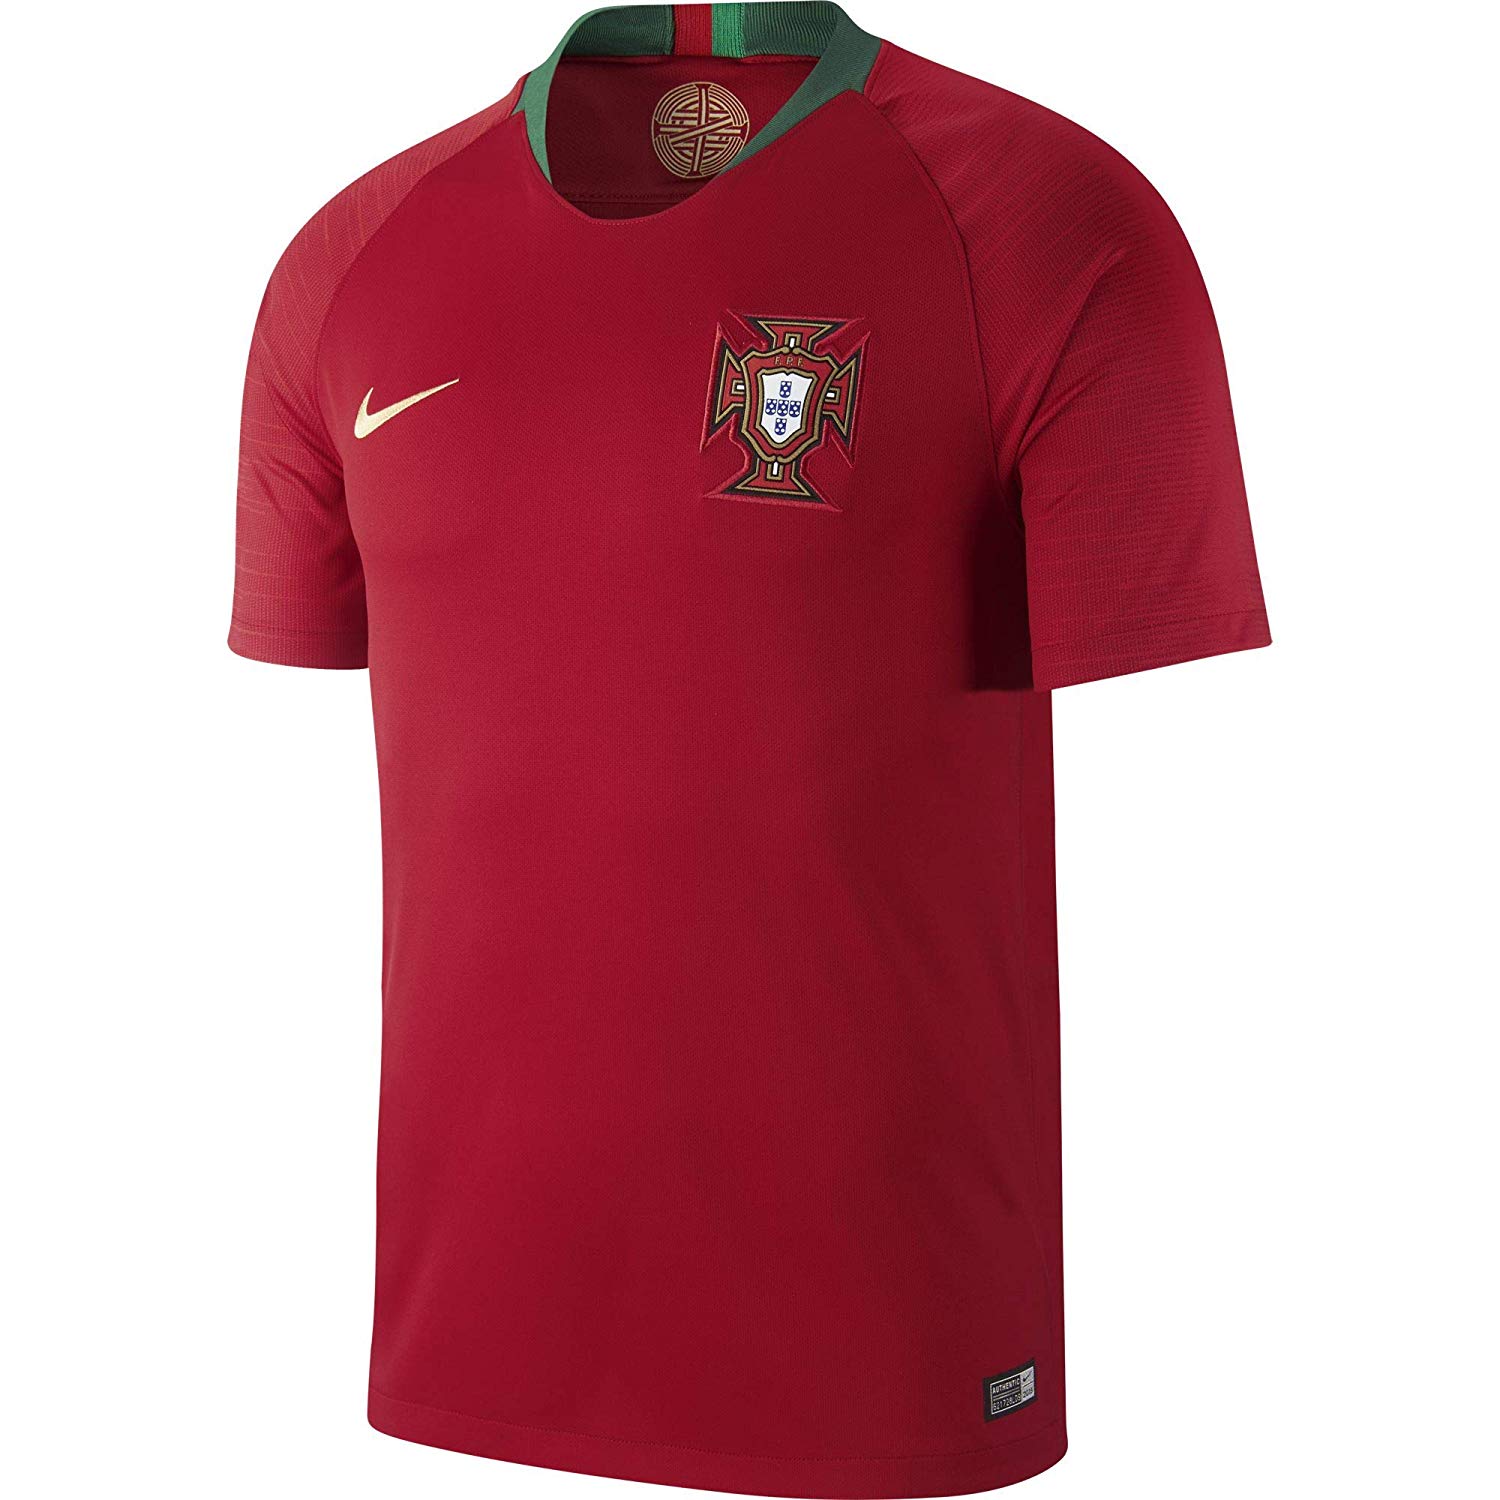 Buy portugal jersey online 